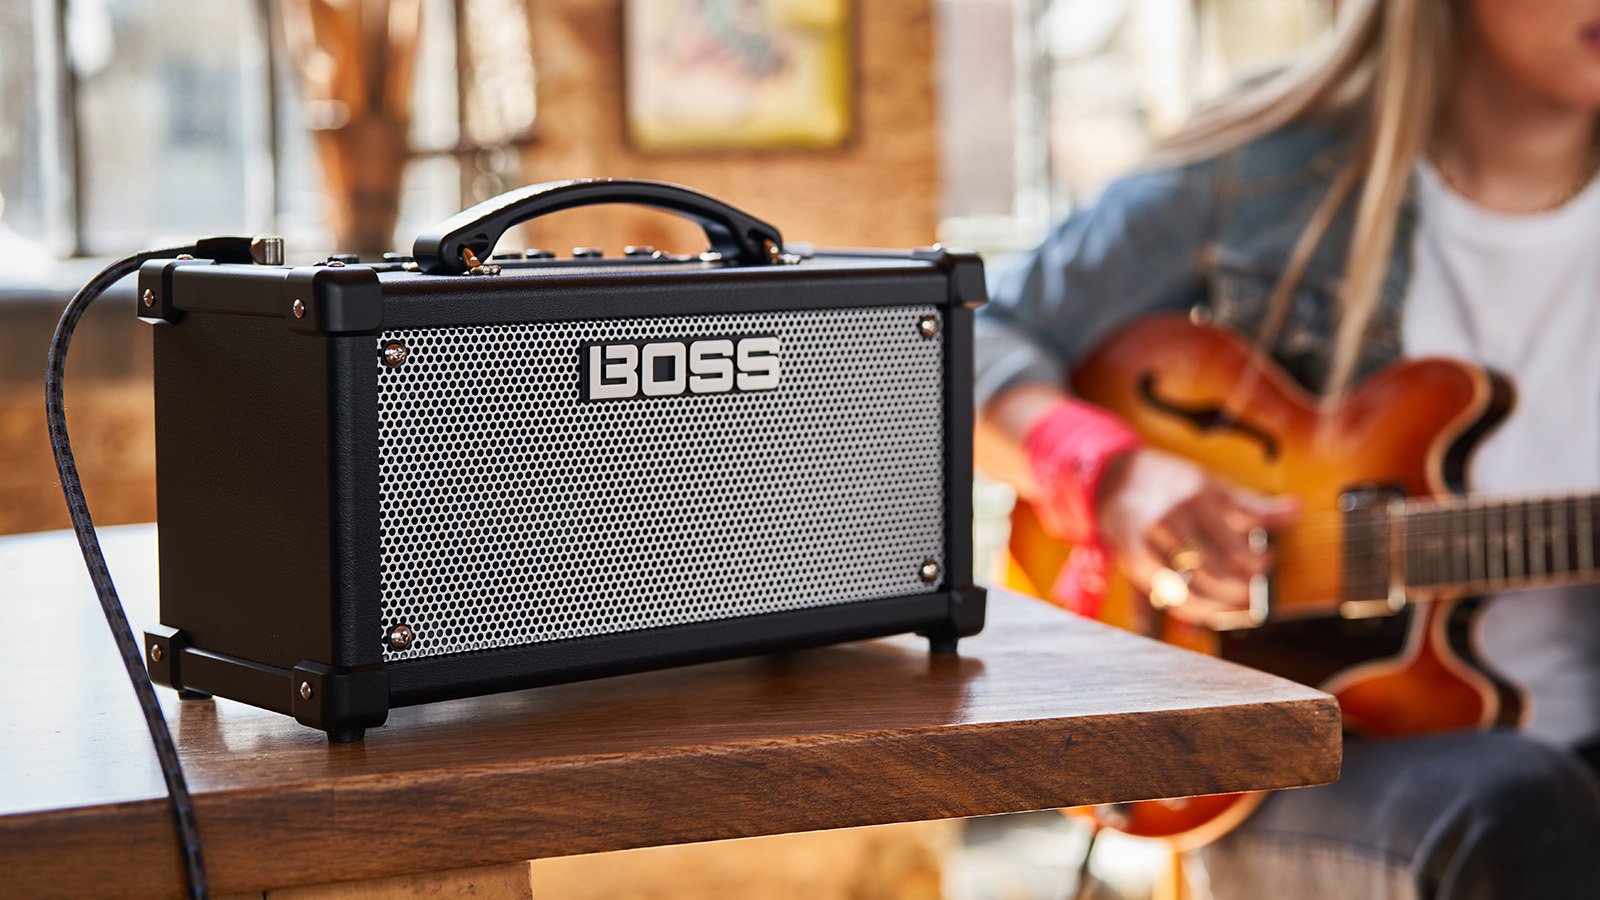 BOSS DUAL CUBE LX ultra-portable stereo guitar amplifier has a go-everywhere design